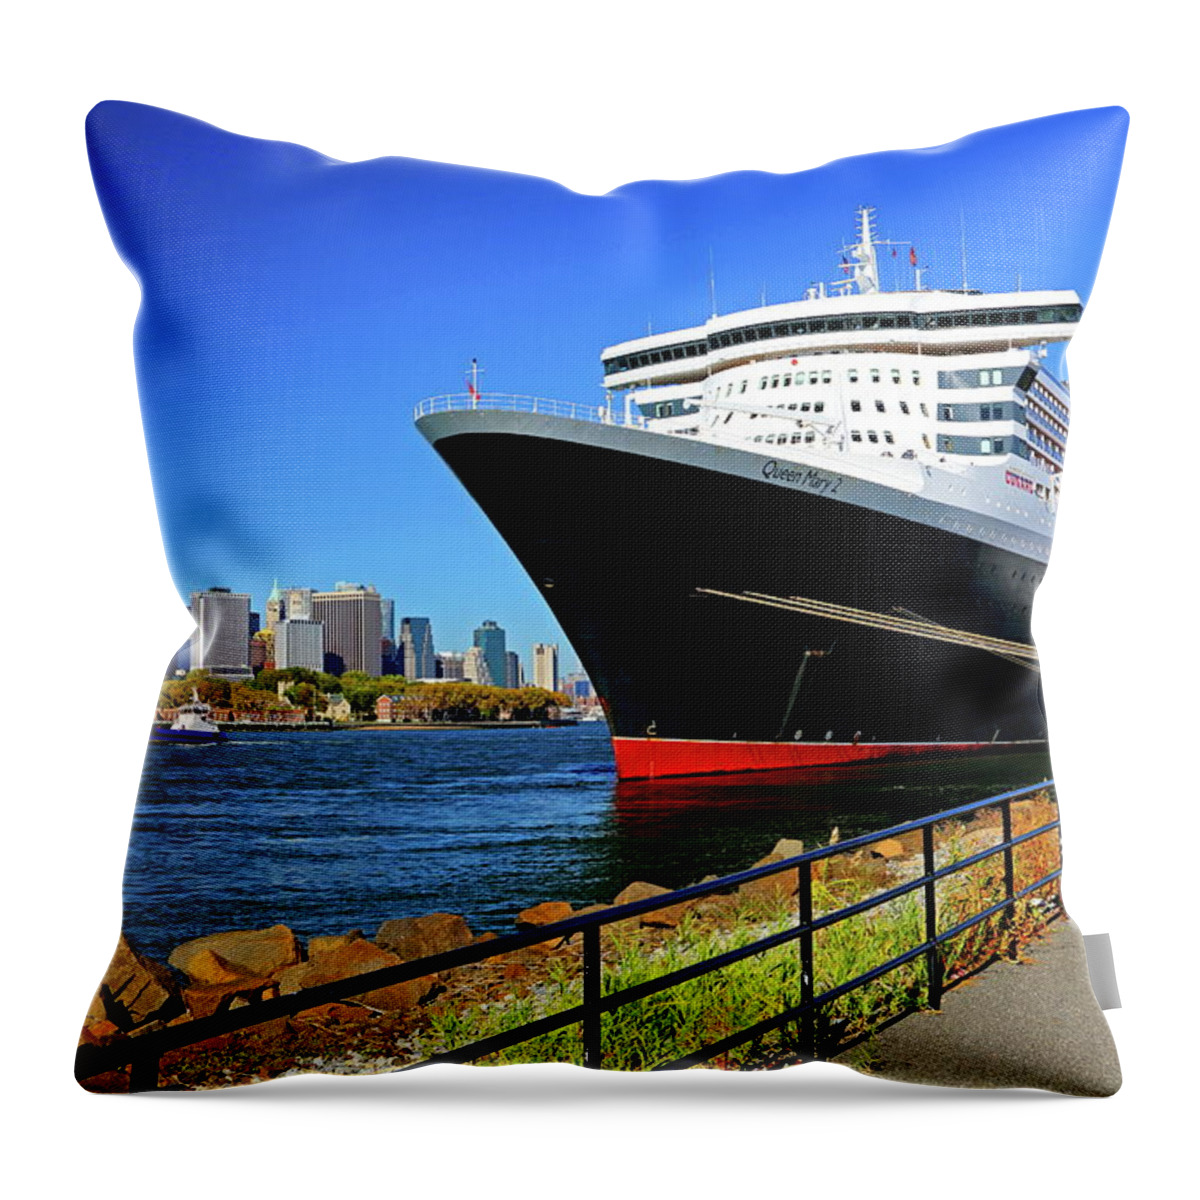 Estock Throw Pillow featuring the digital art Cruise Ship & Nyc Skyline by Gunter Grafenhain